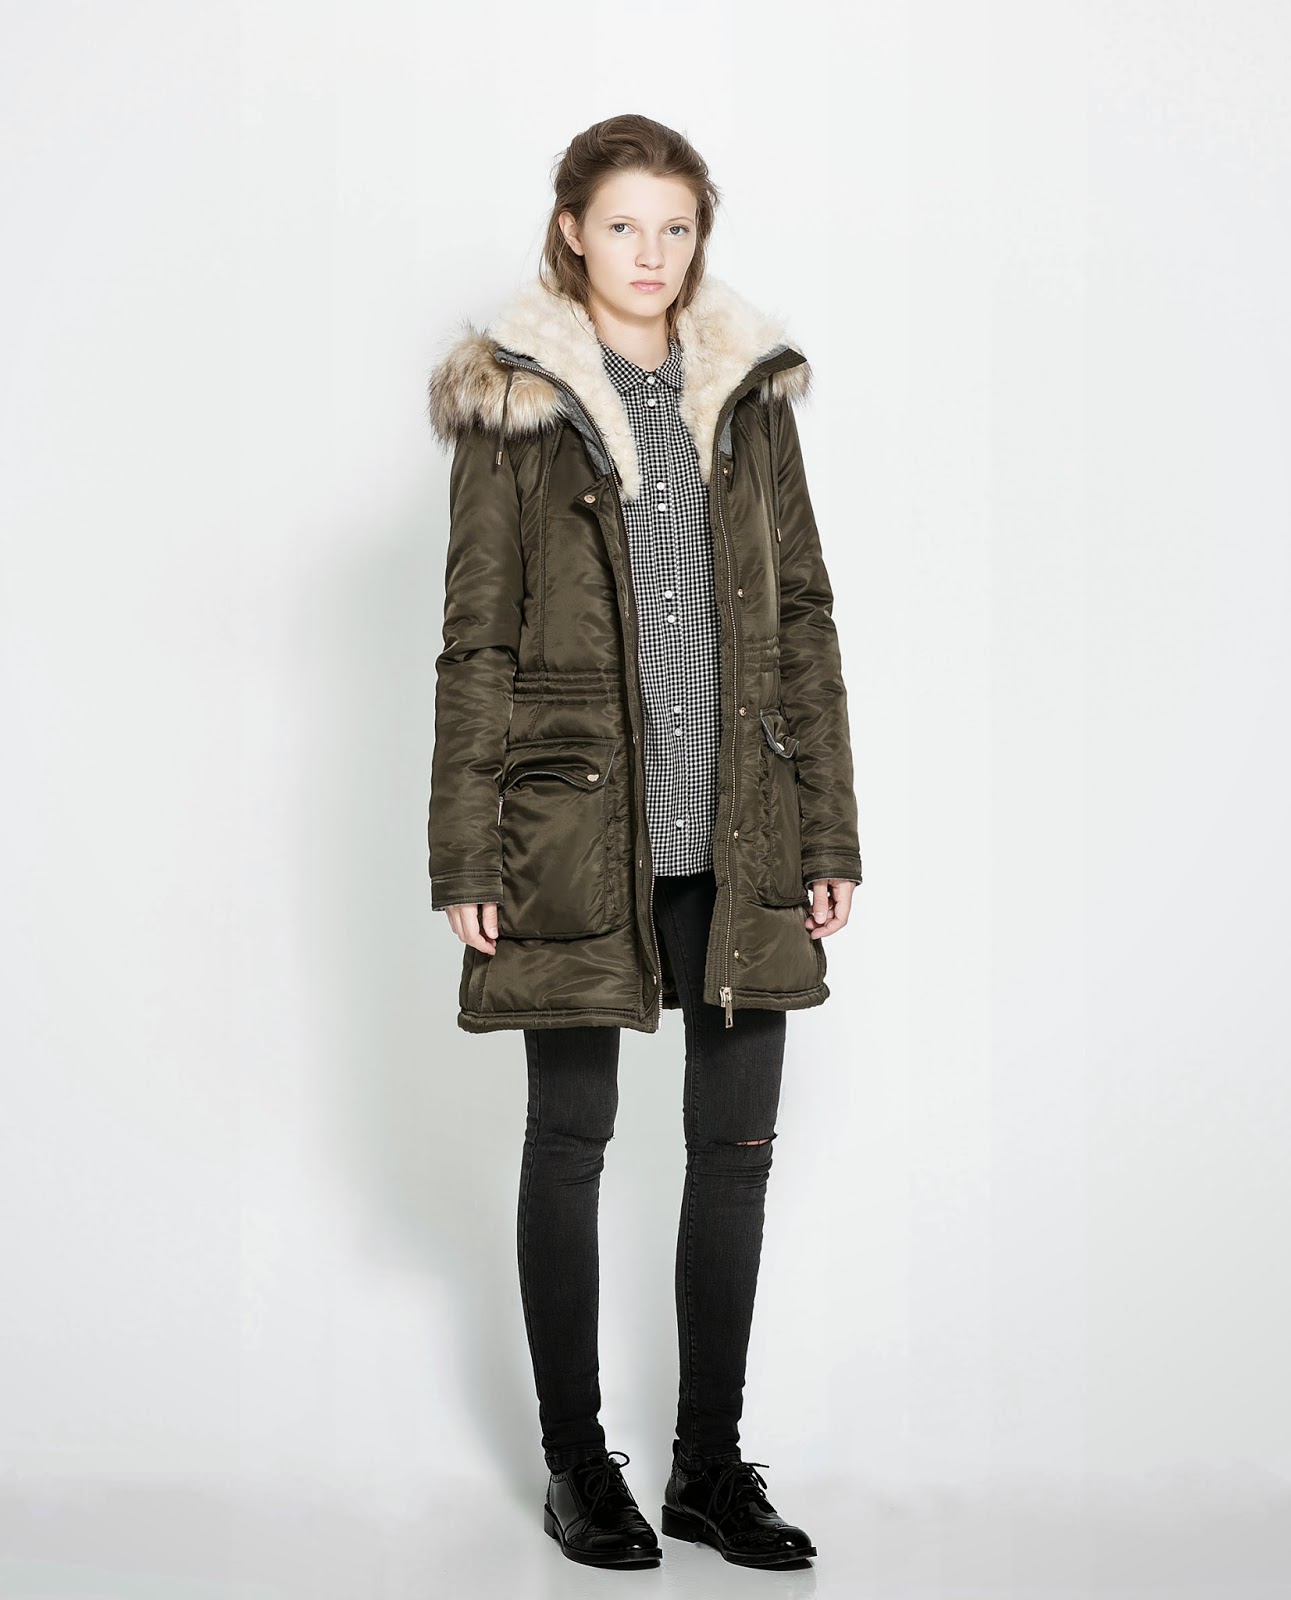 dress: Zara Fall-Winter 2014 Coats Models